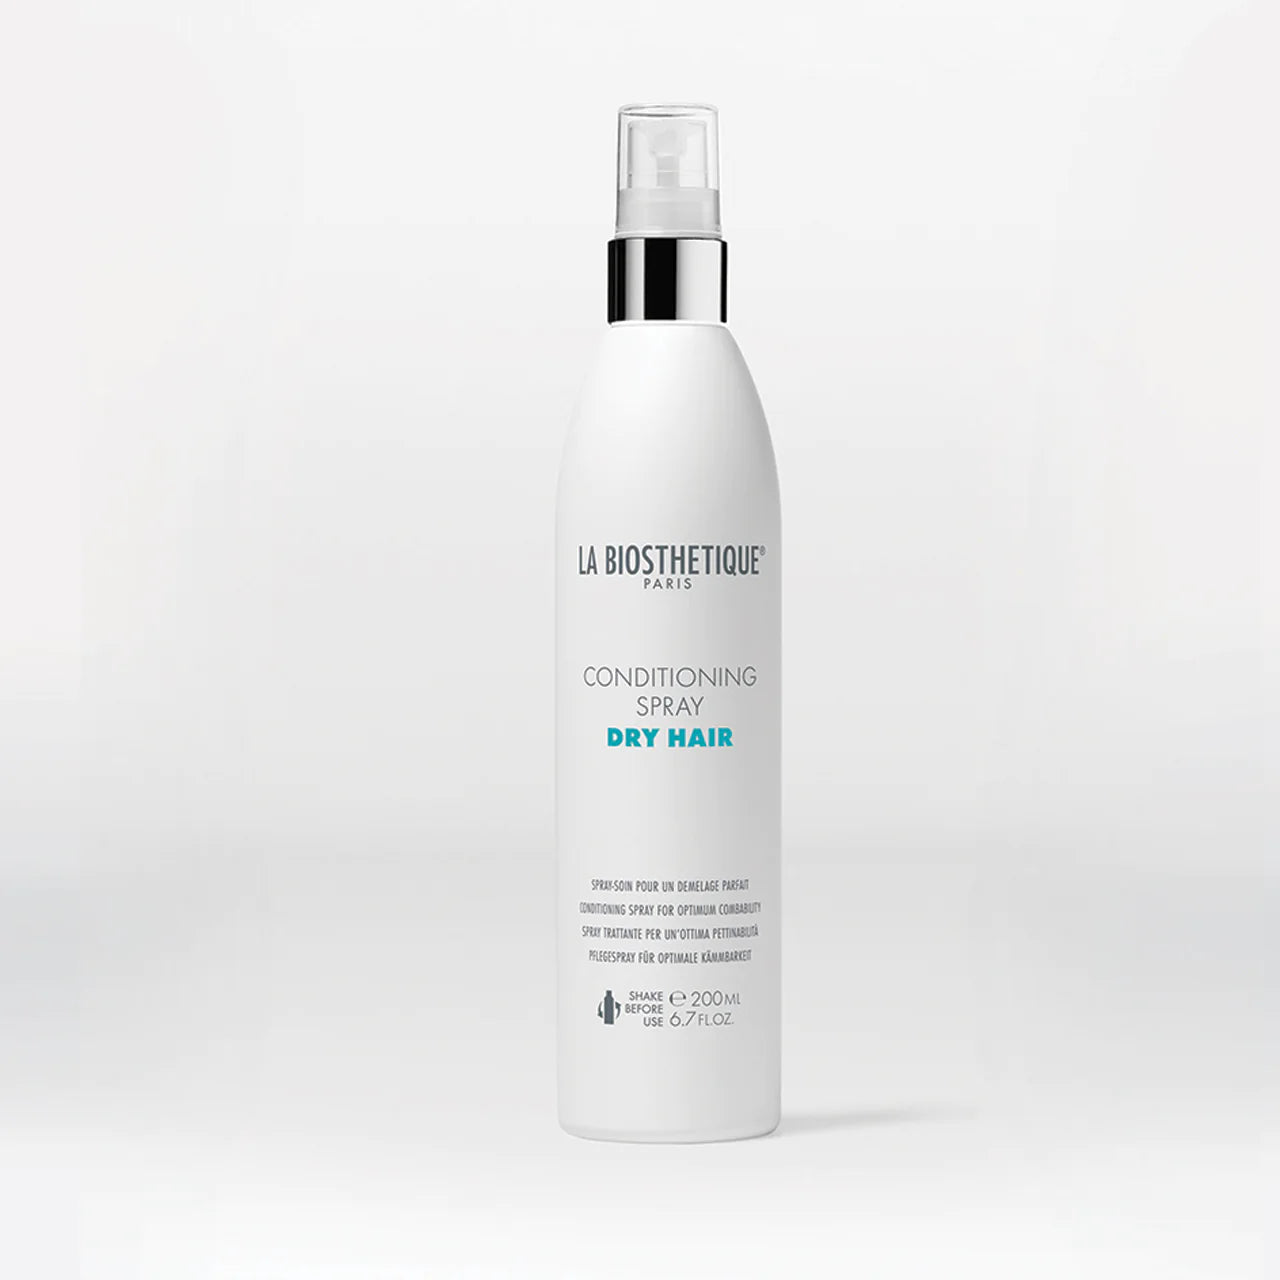 La Biosthetique's Dry Hair Conditioning Spray - 200ml